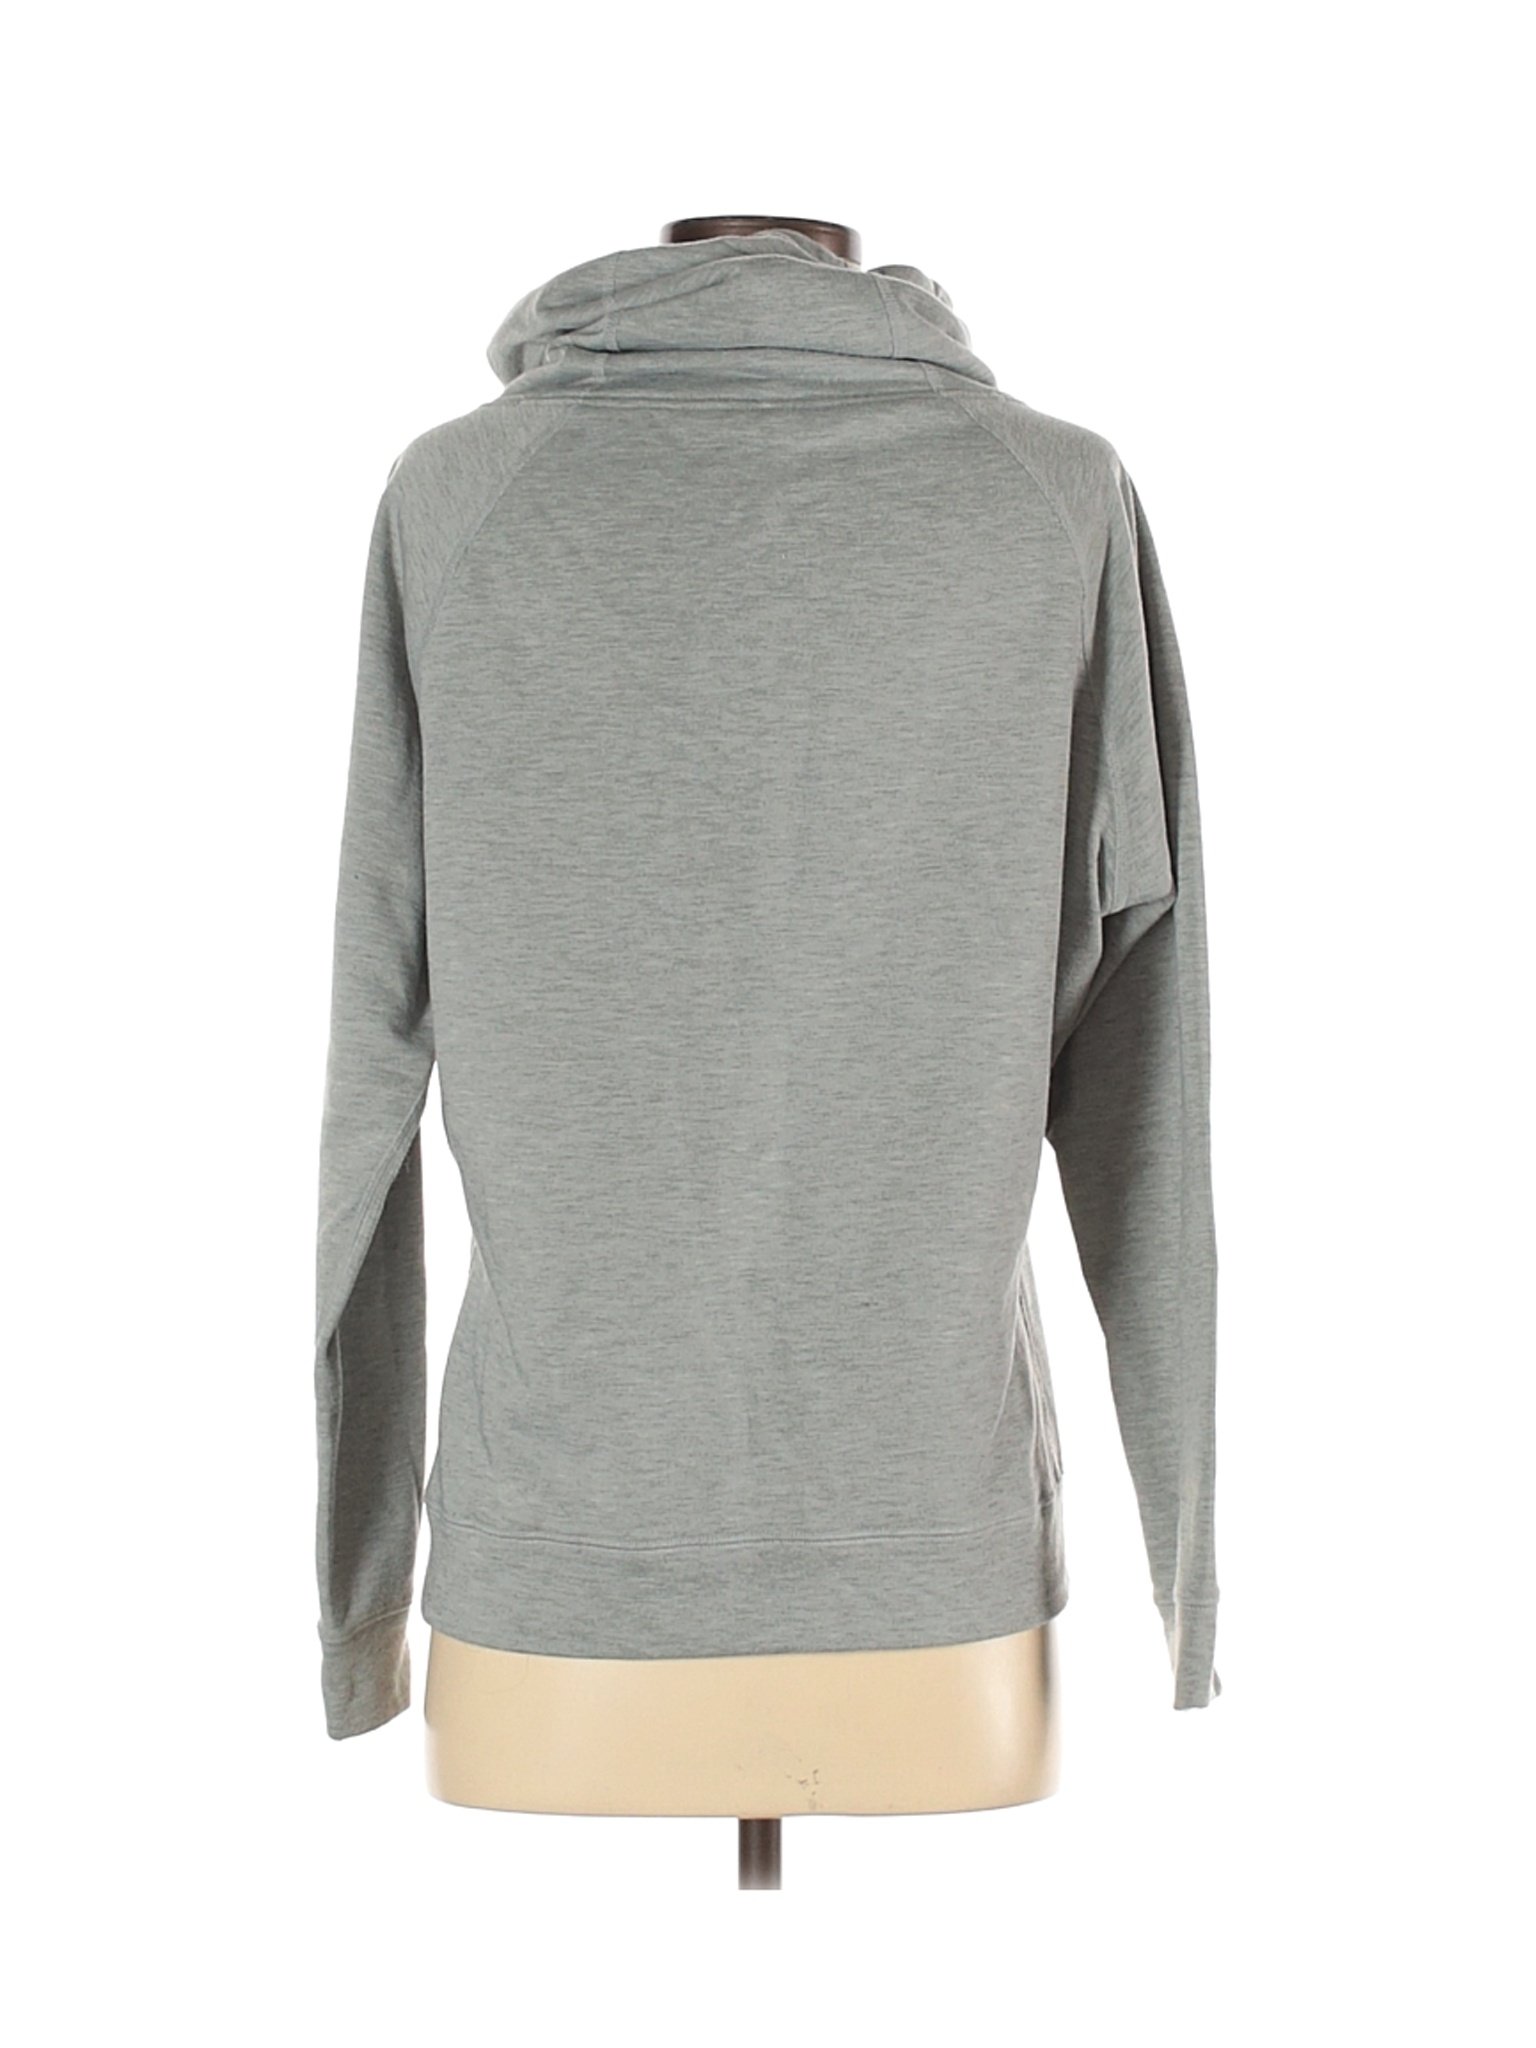 Nike Women Gray Sweatshirt S | eBay